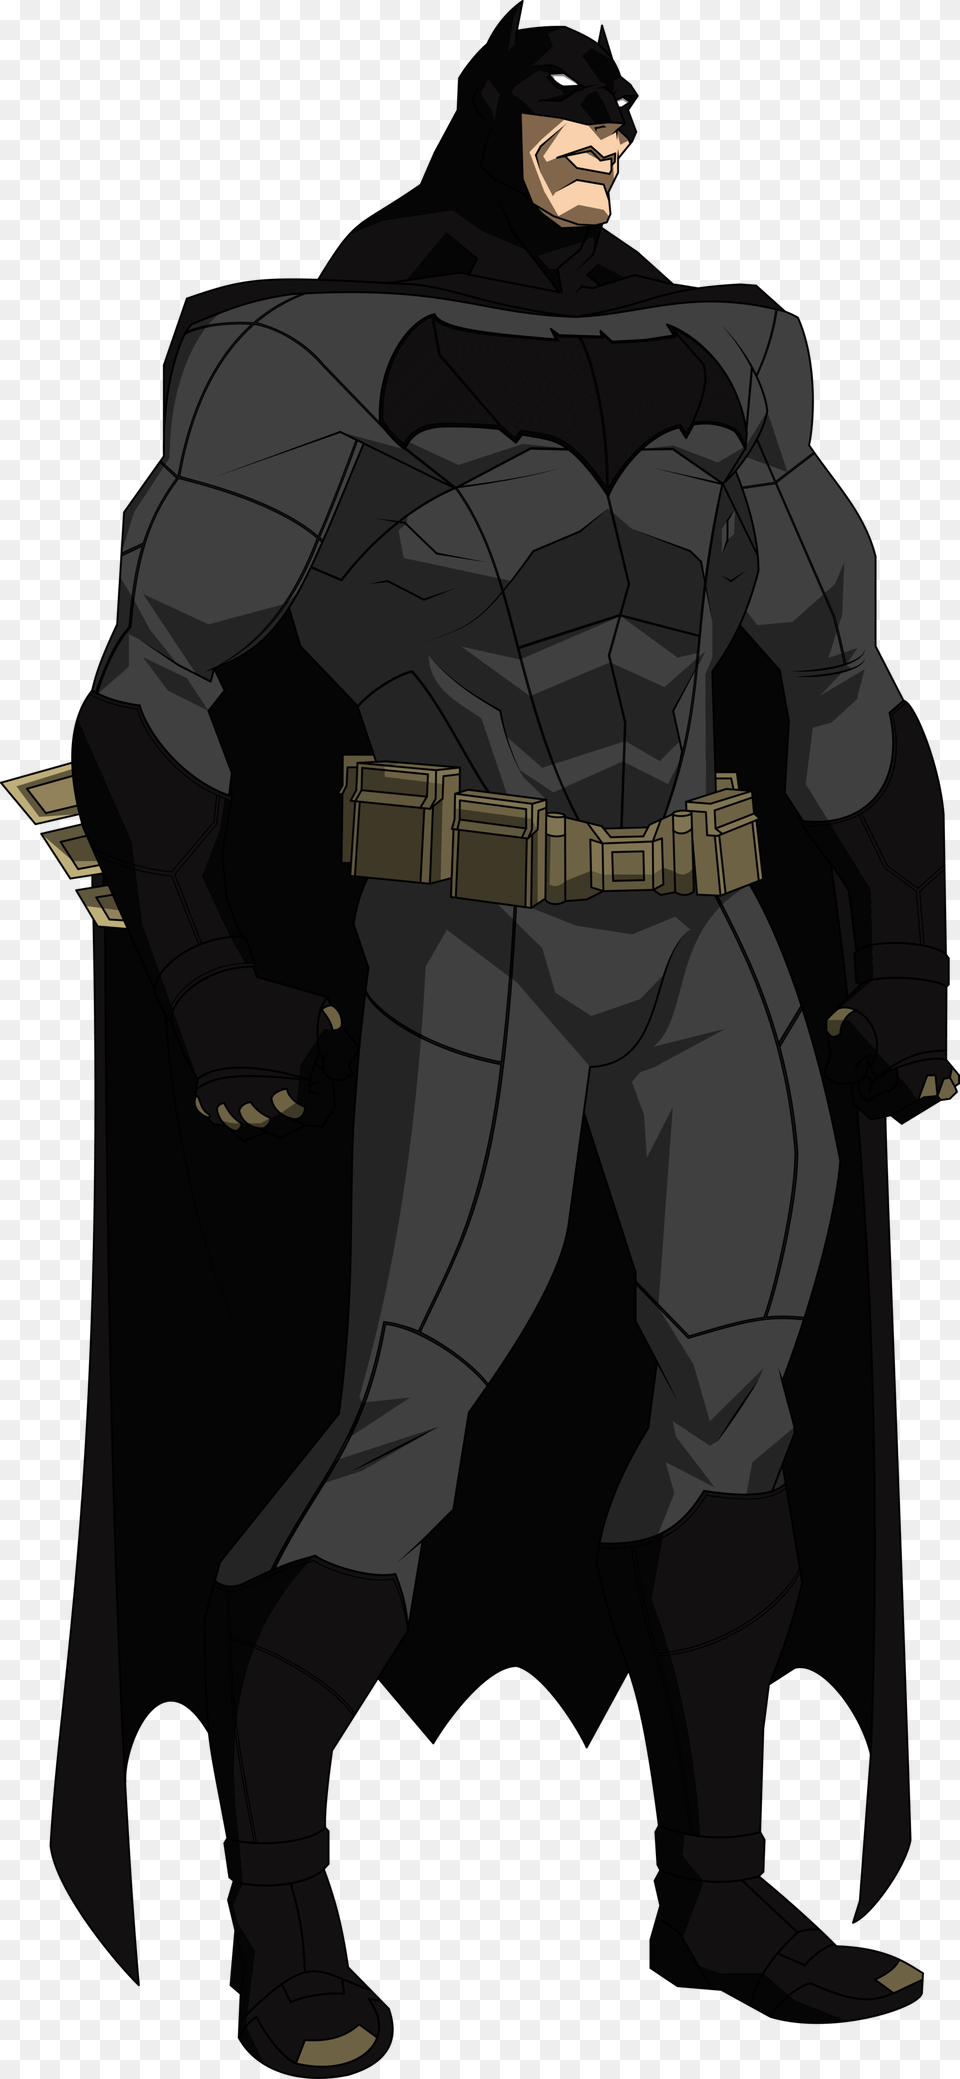 Batman Thomas Wayne, Adult, Male, Man, Person Png Image